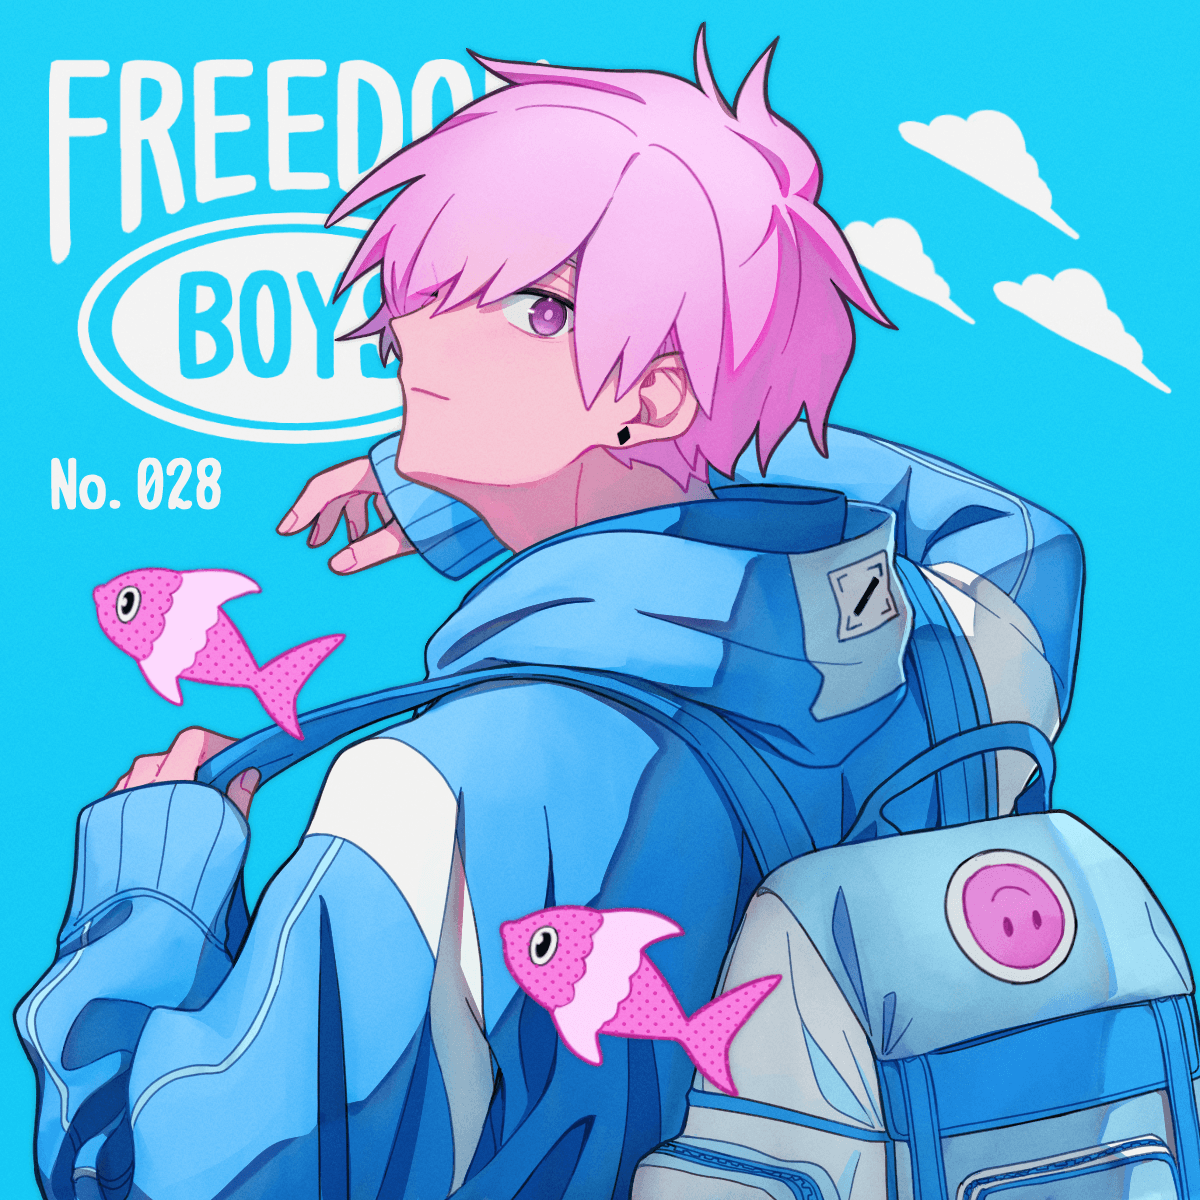 FREEDOM BOYS No.028